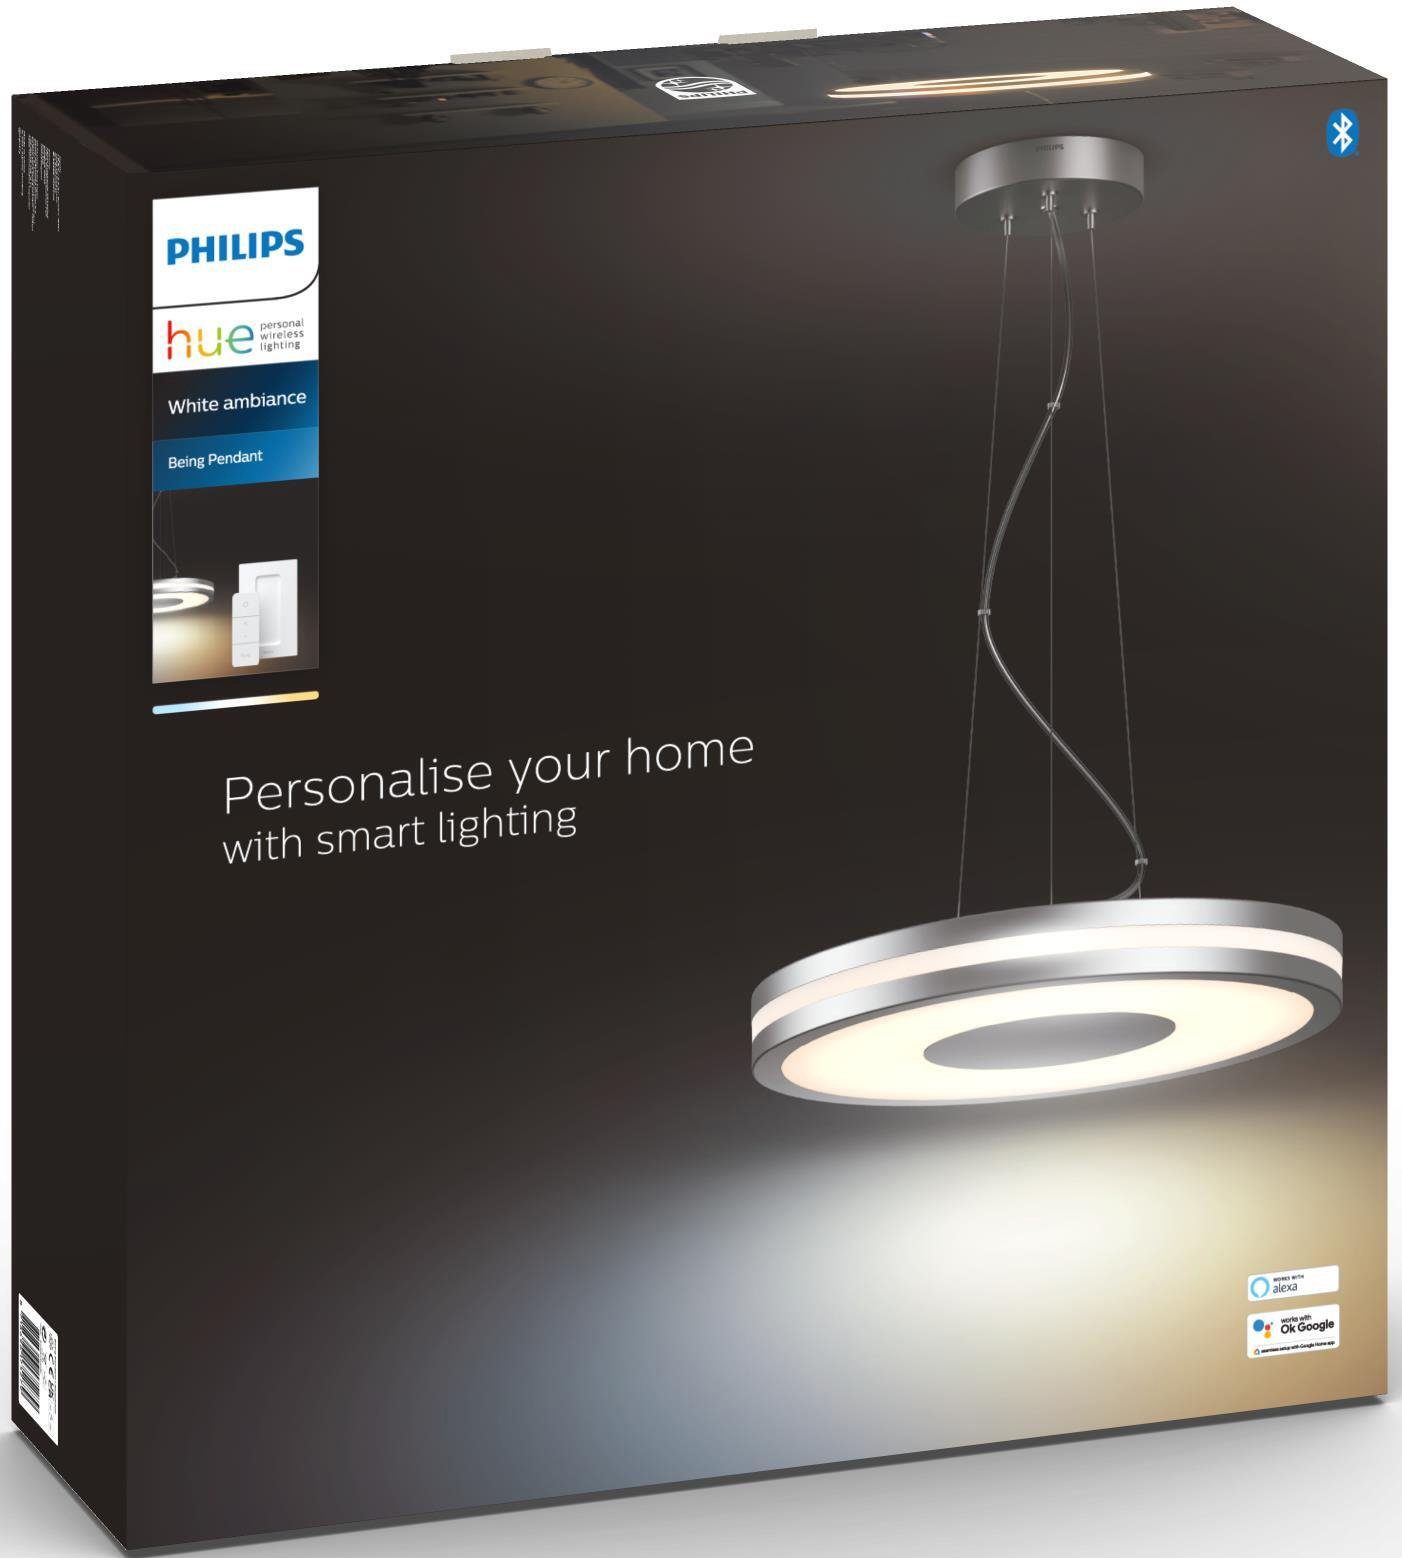 LED integriert, Pendelleuchte Warmweiß Philips Dimmfunktion, Being, fest LED Hue